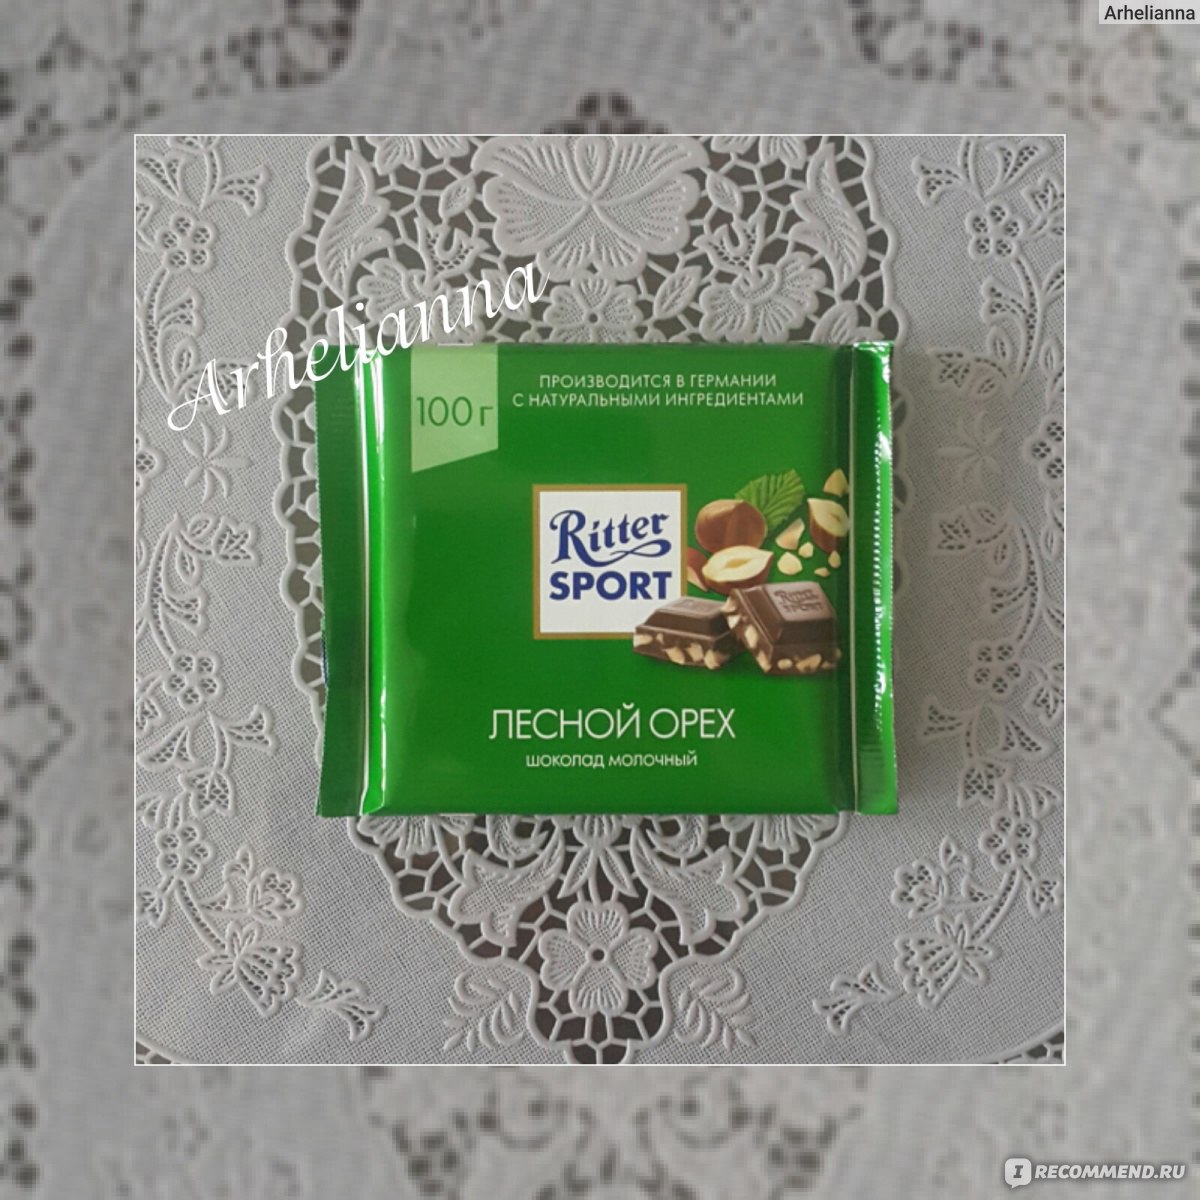 Шоколад Риттер спорт зеленая упаковка